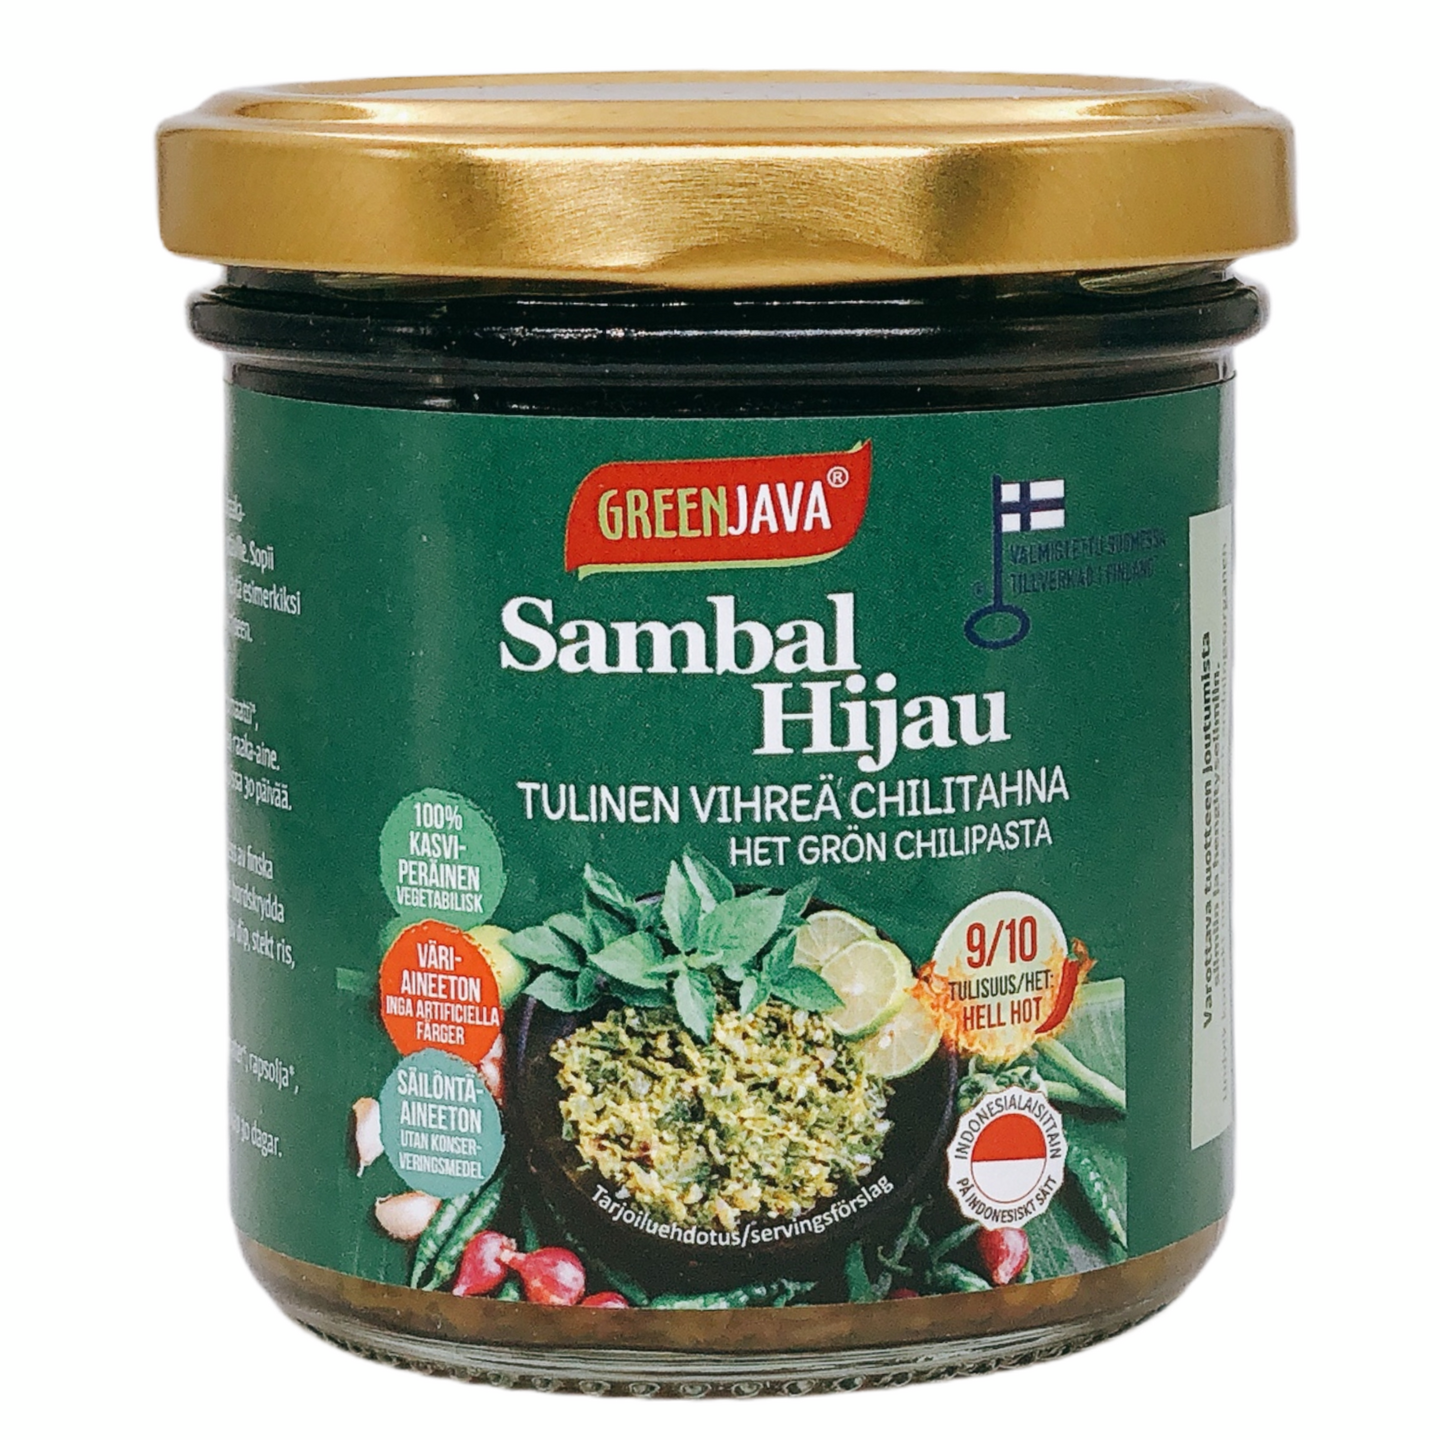 Greenjava® Sambal Hijau tulinen vihreä chilitahna 140 g